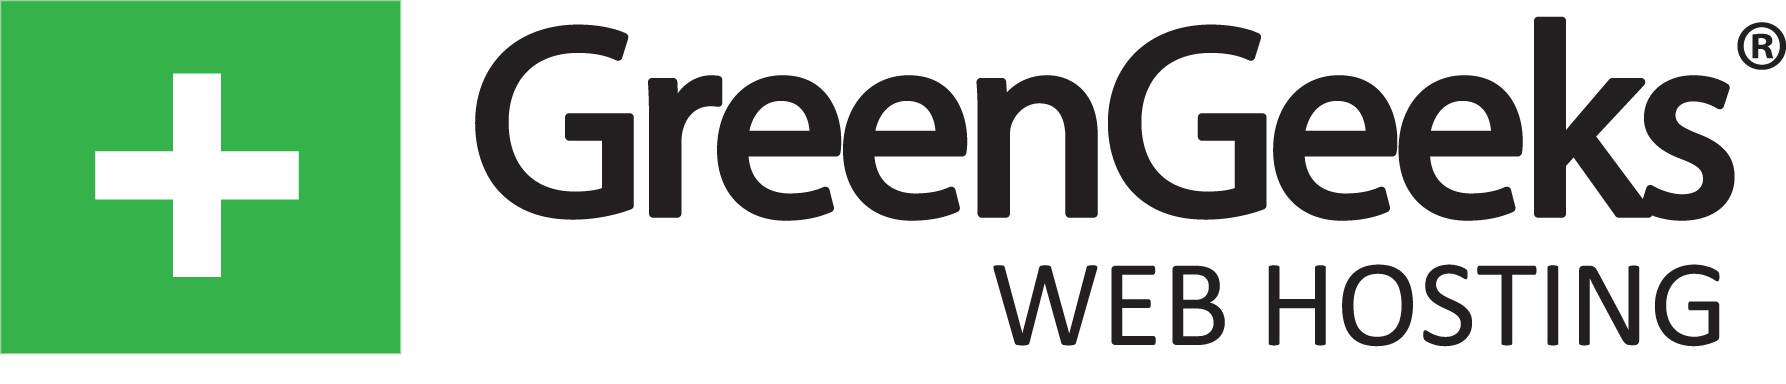 Green Geeks Web Hosting logo